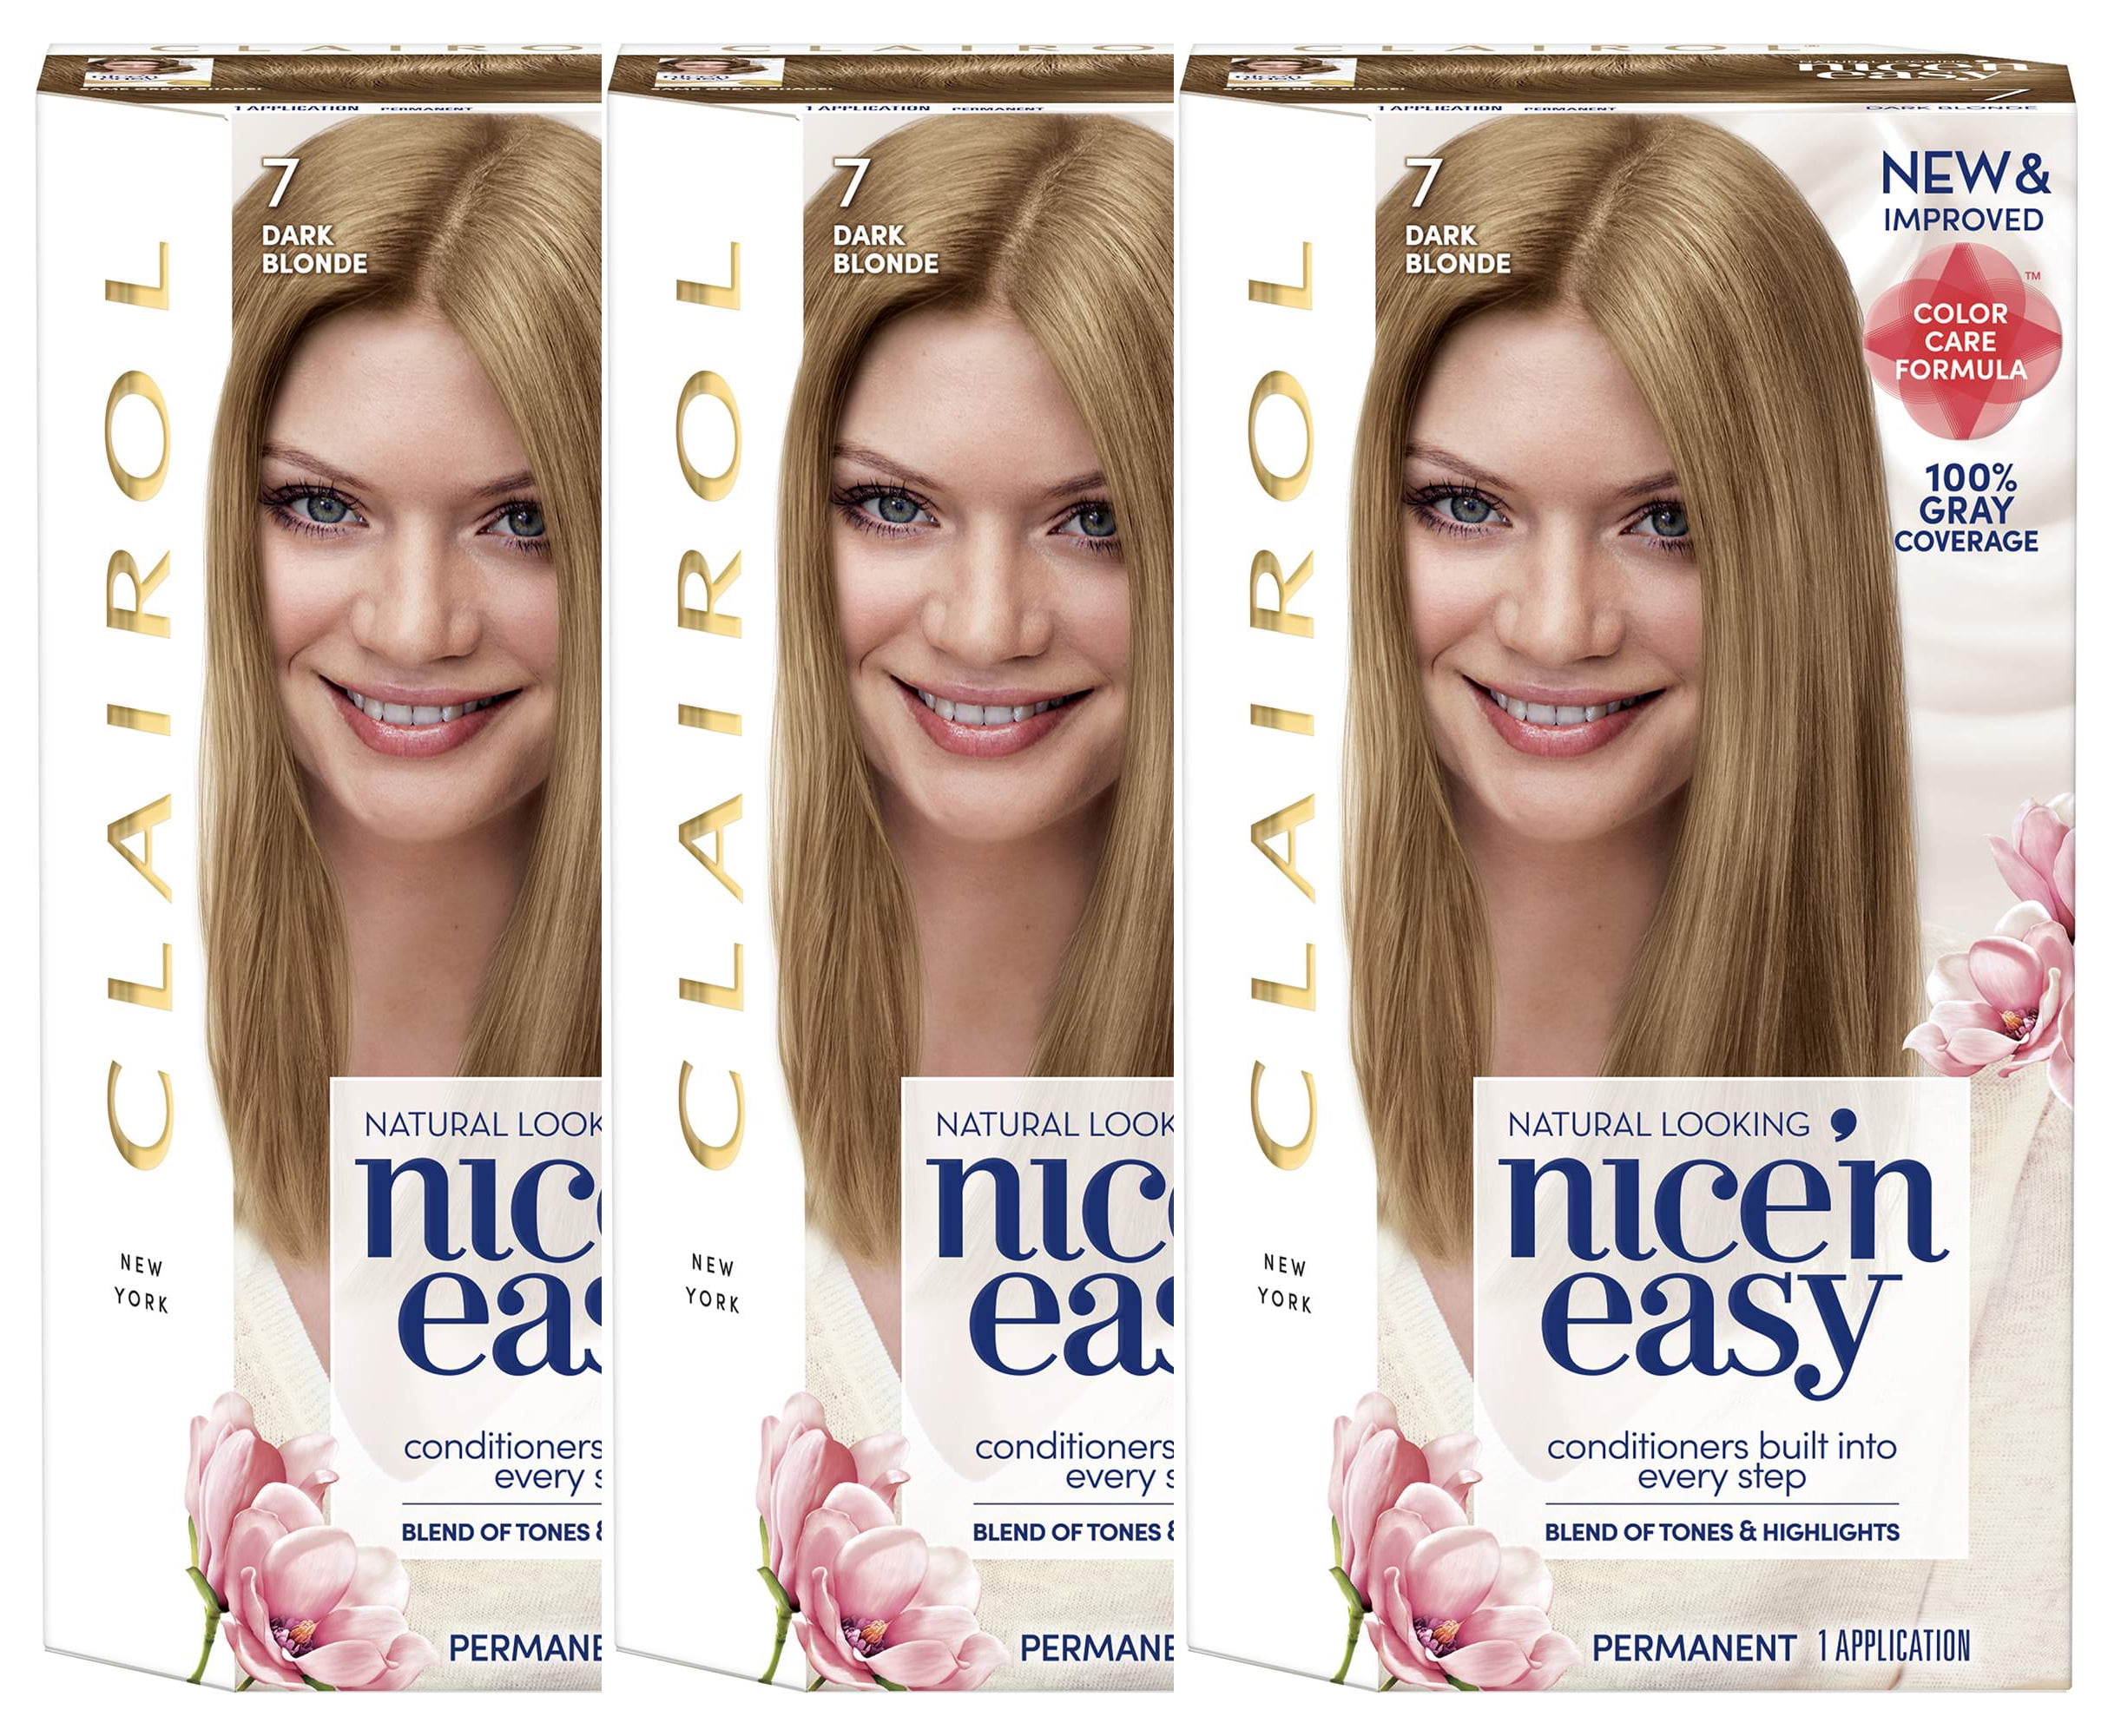 9. Clairol Natural Instincts Semi-Permanent Hair Color, 7 Dark Blonde - wide 8